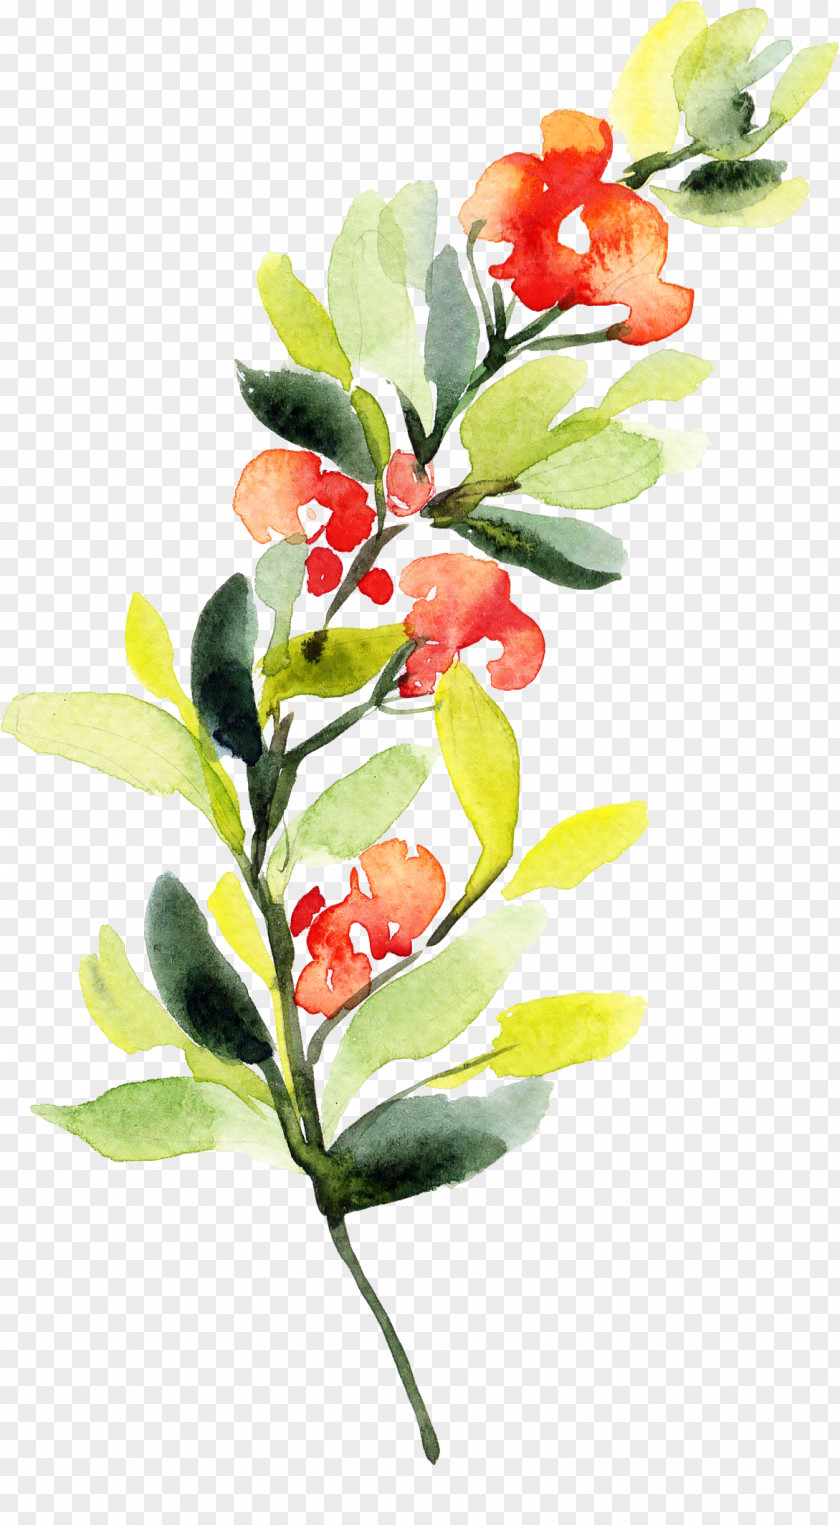 Watercolor Paint Petal Flower Plant Branch Flowering Leaf PNG